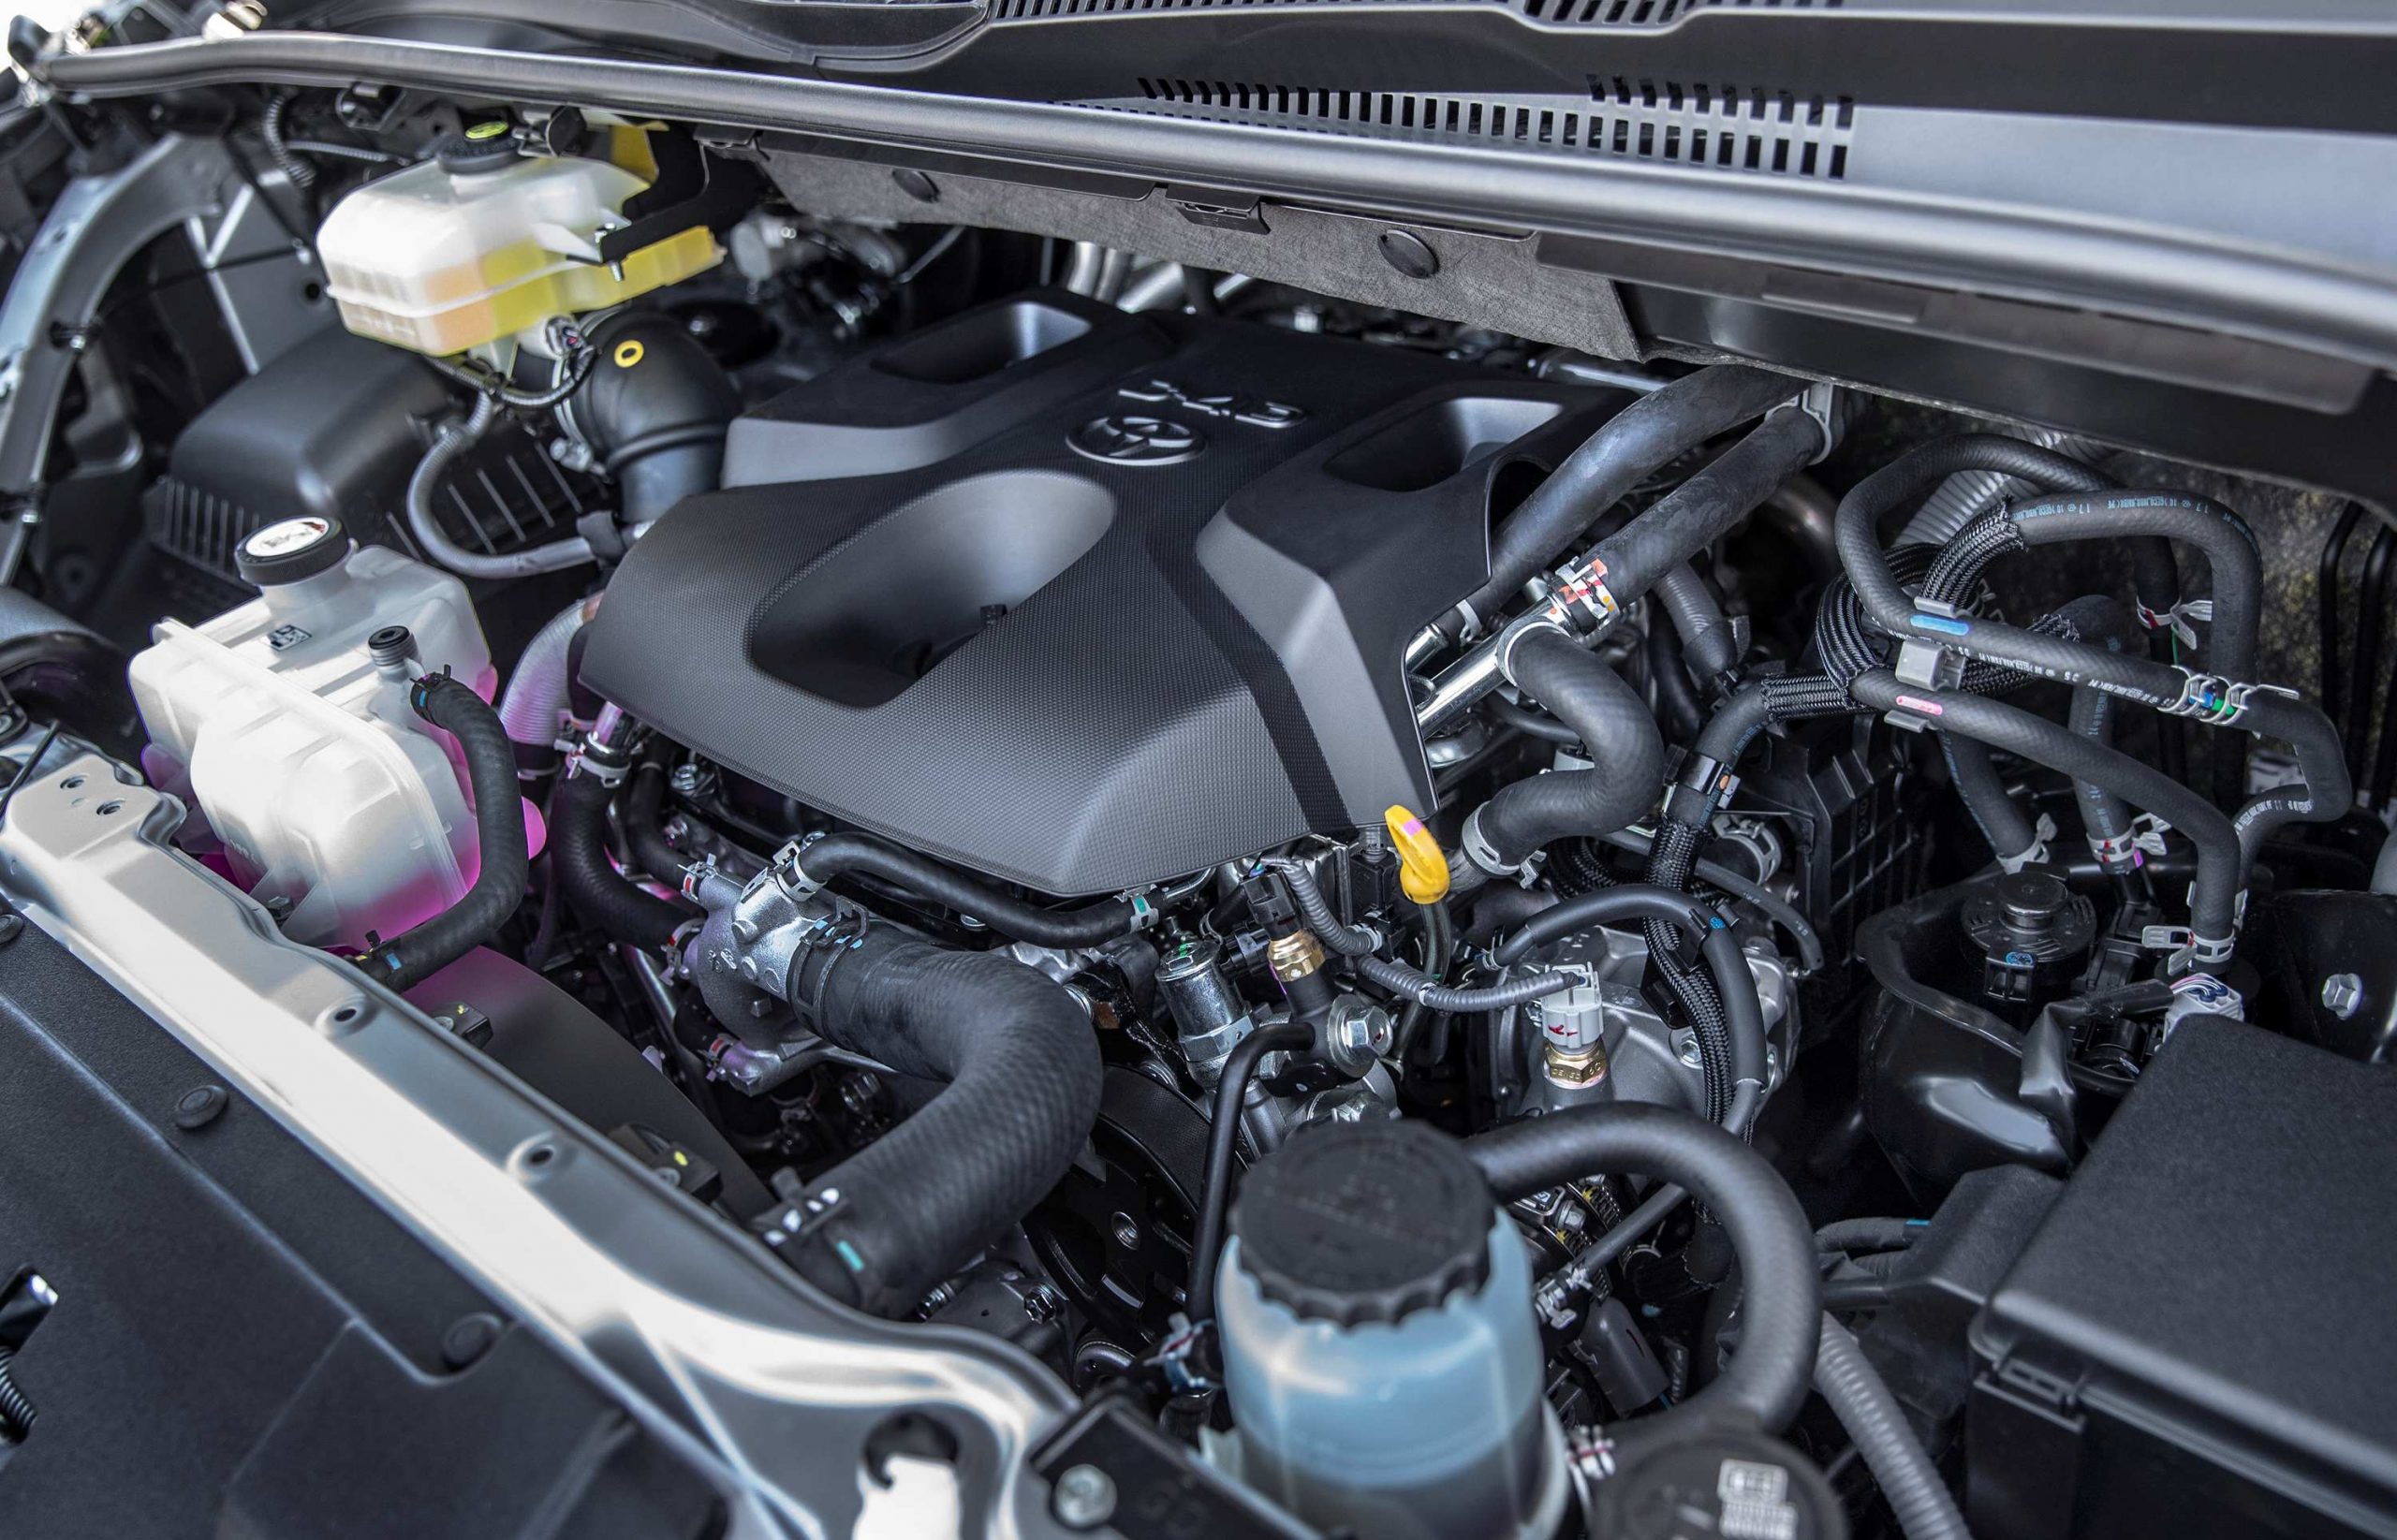 2019 Toyota Granvia range 2.8-litre turbodiesel engine.